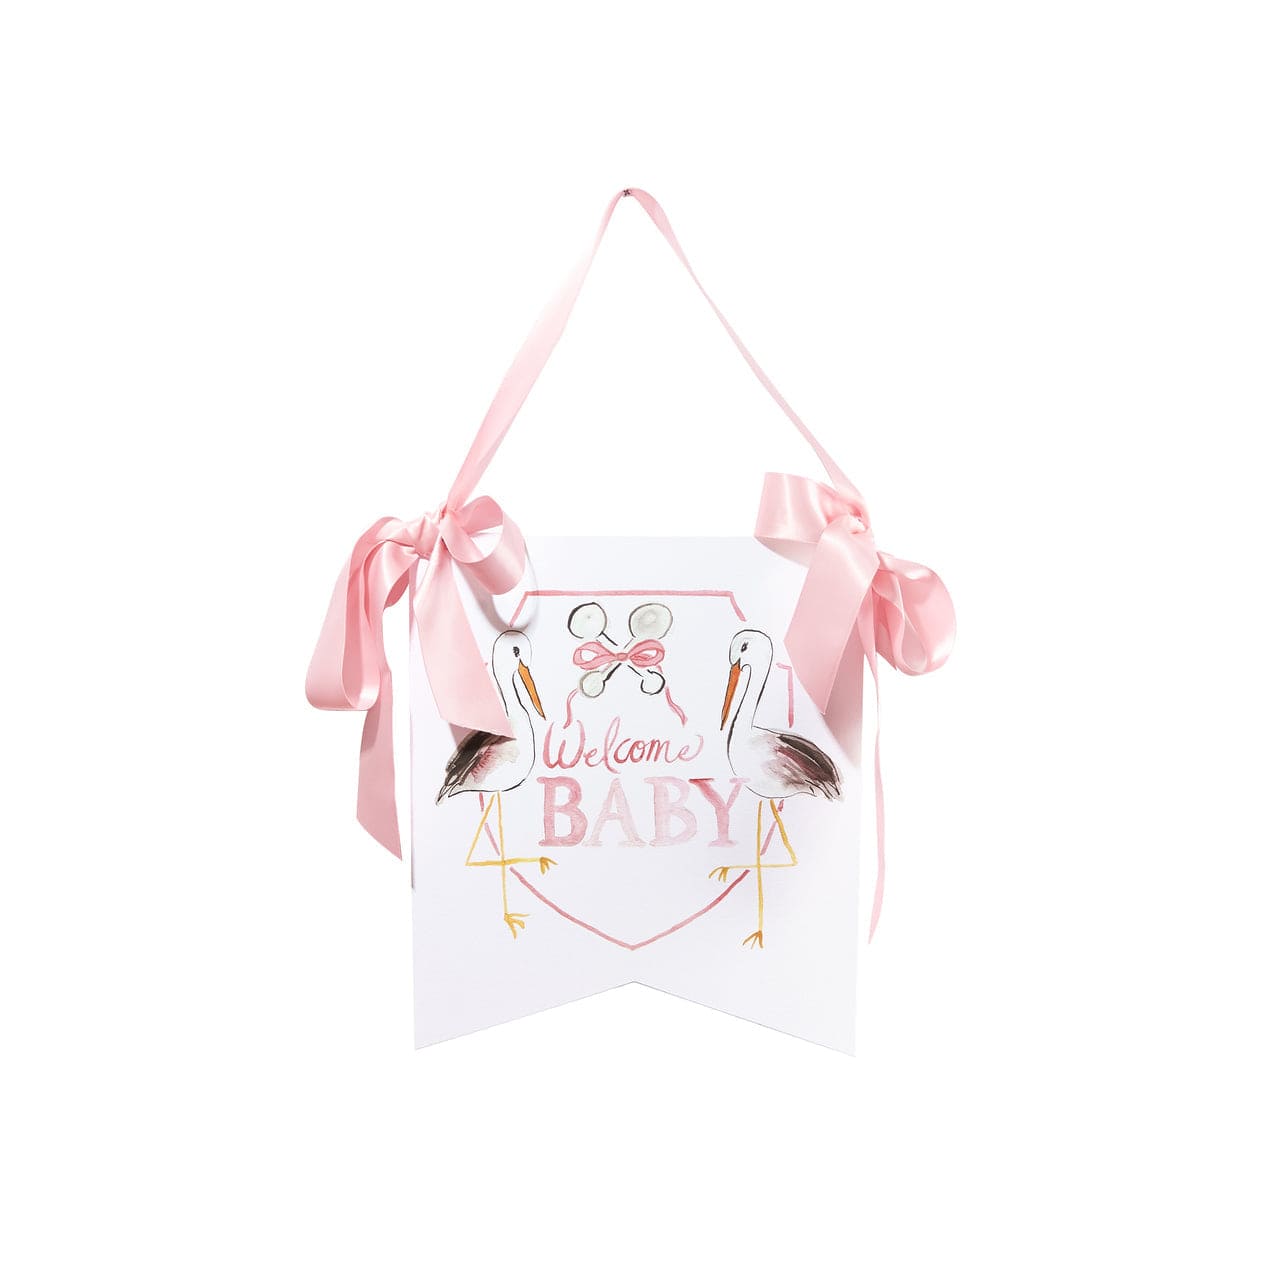 "Welcome Baby" Stork Hanger, Pink